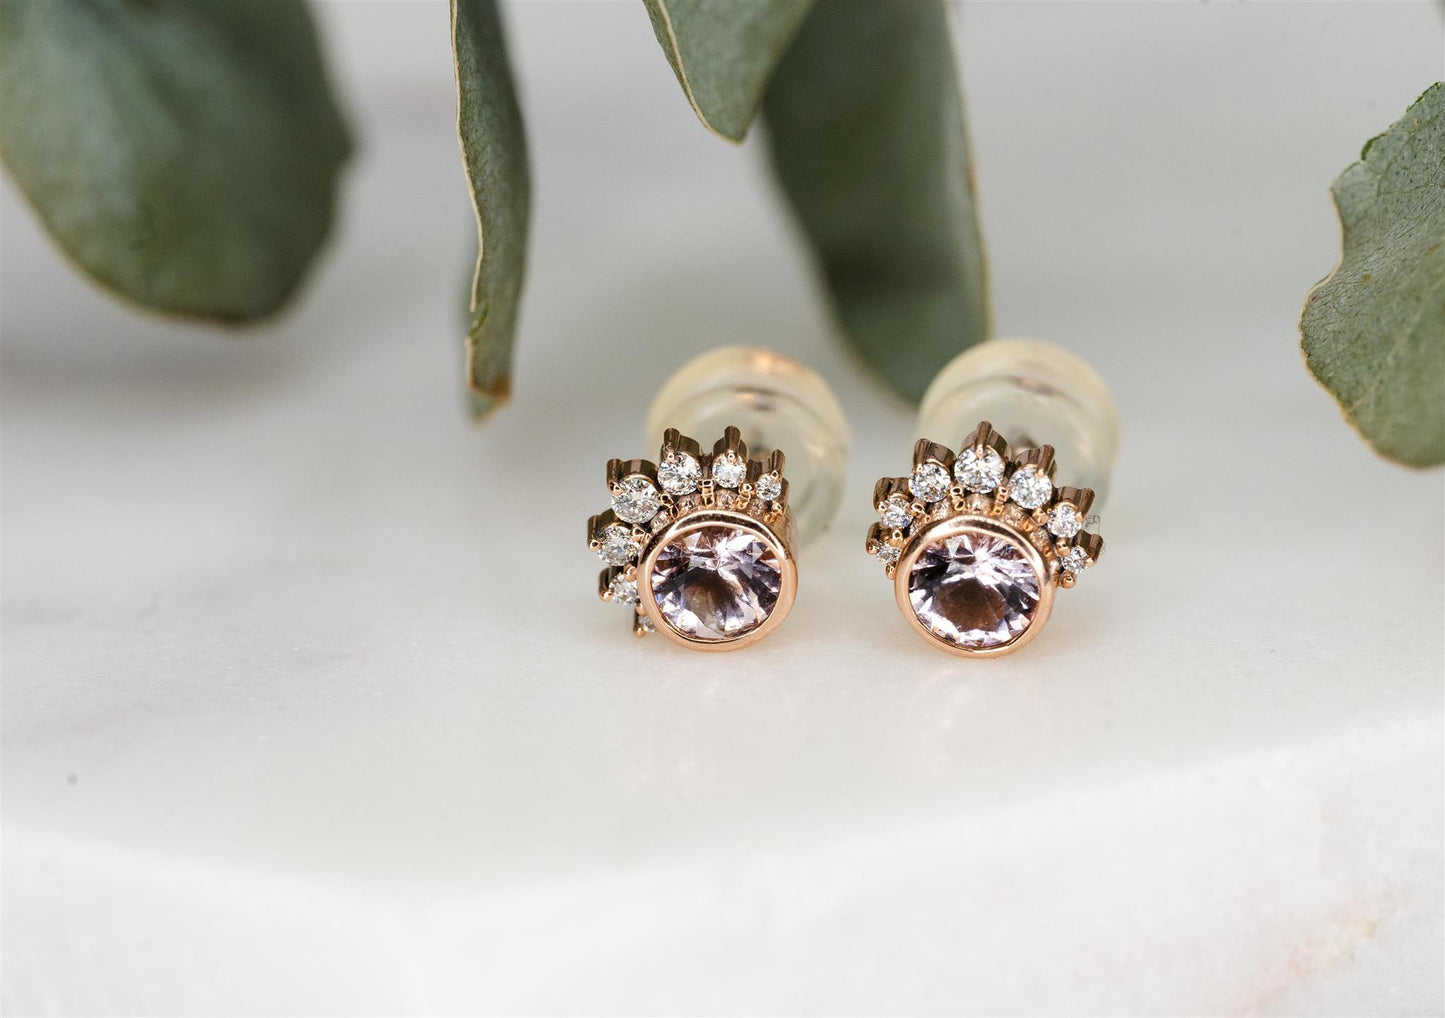 14K Rose Gold Morganite and Diamond Stud Earrings